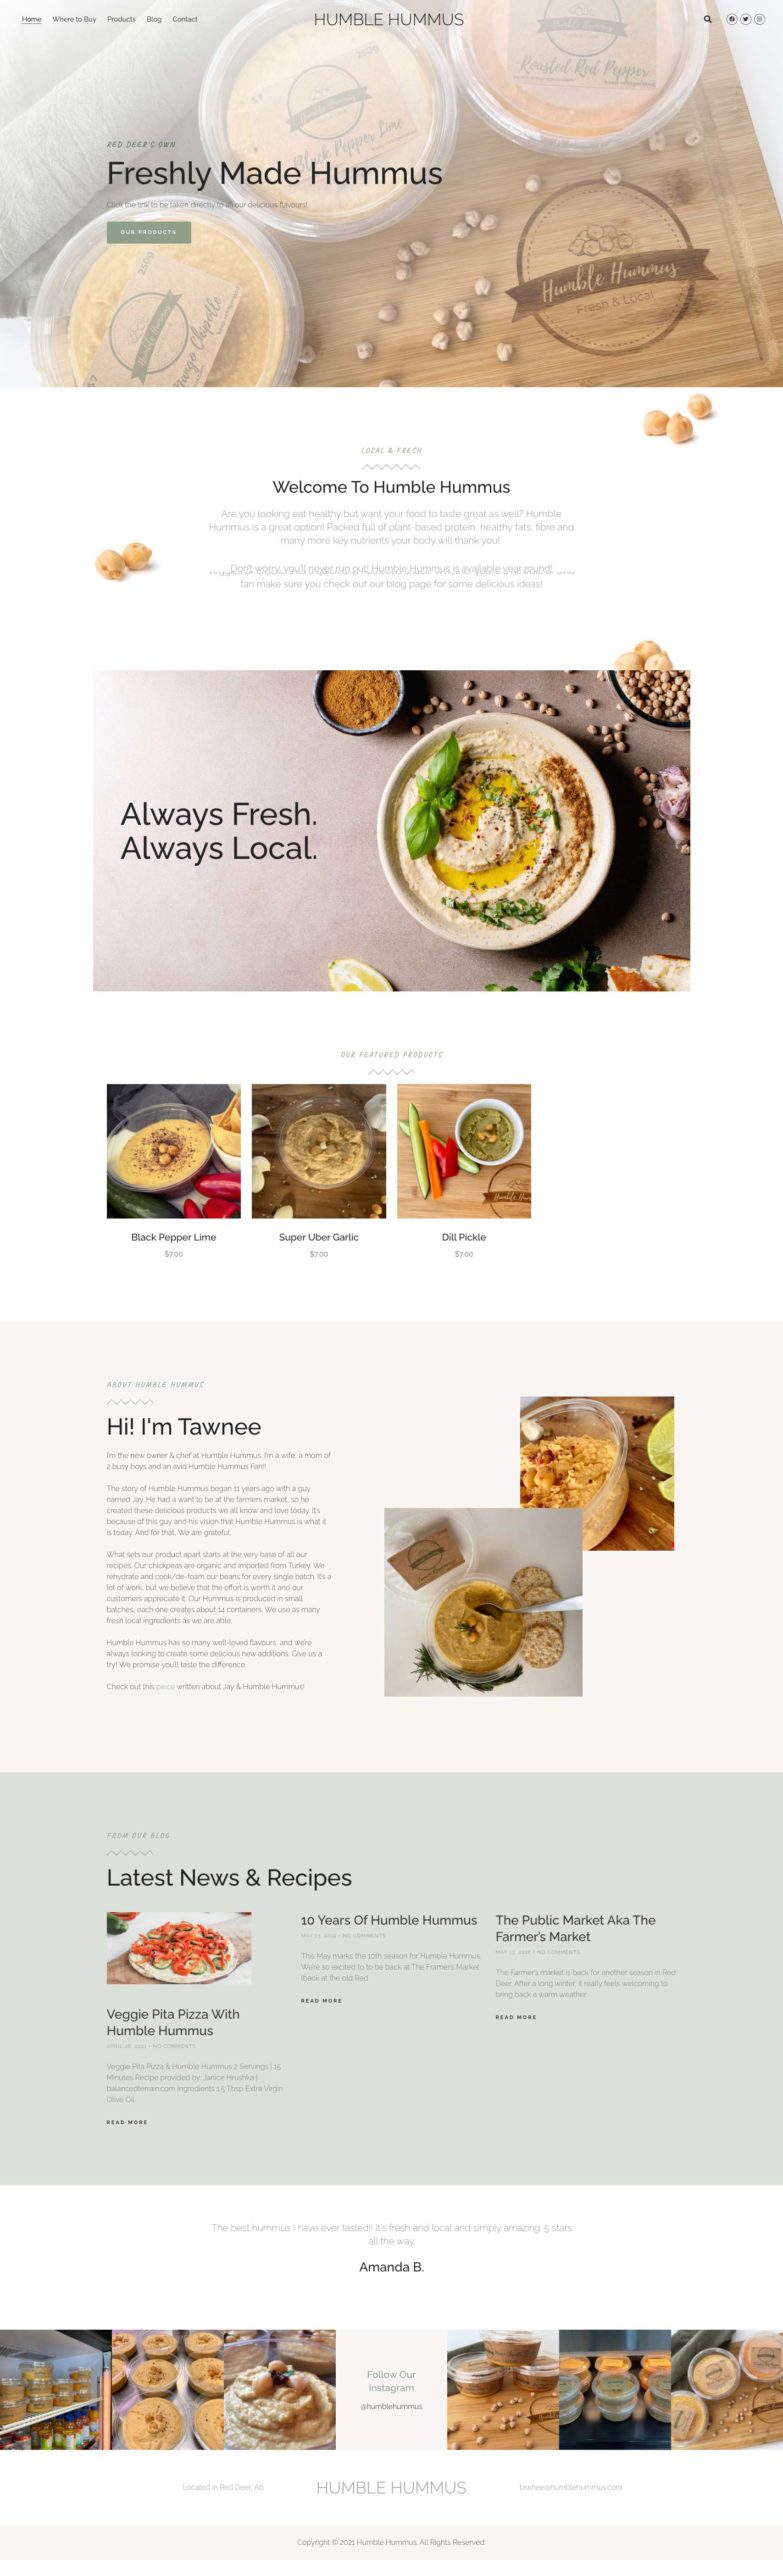 Full page screenshot of Humble Hummus web site